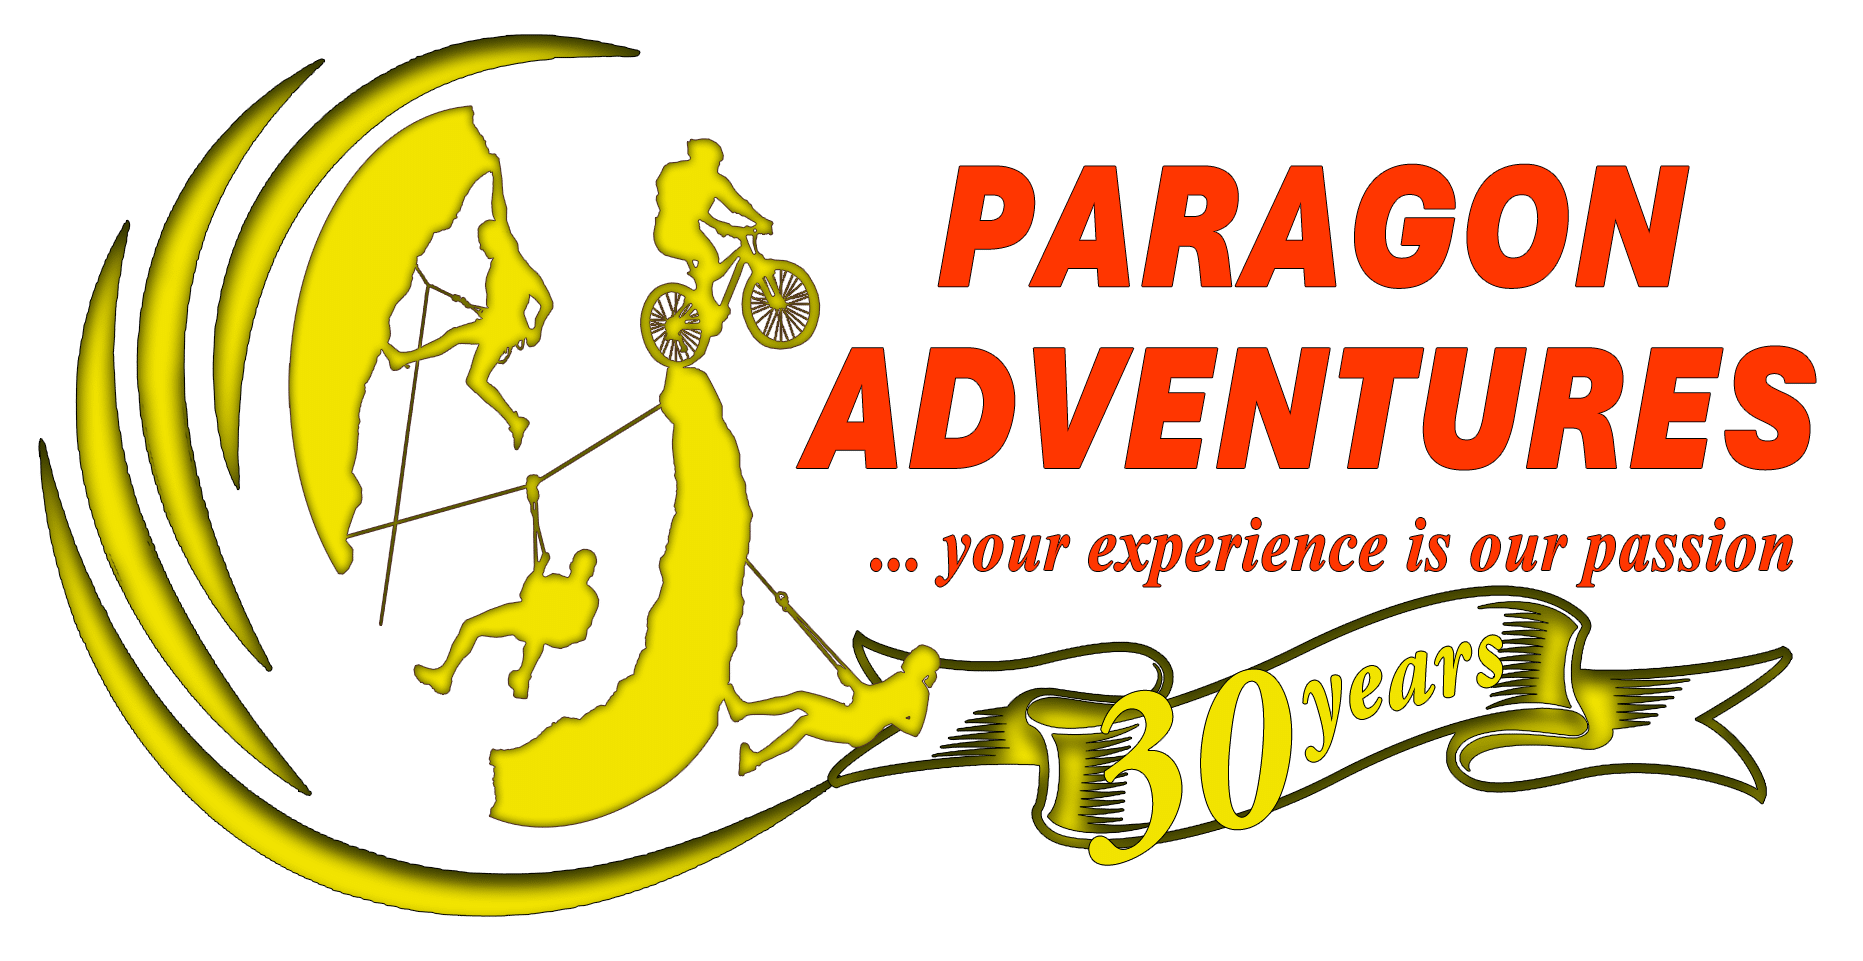 Paragon Adventure